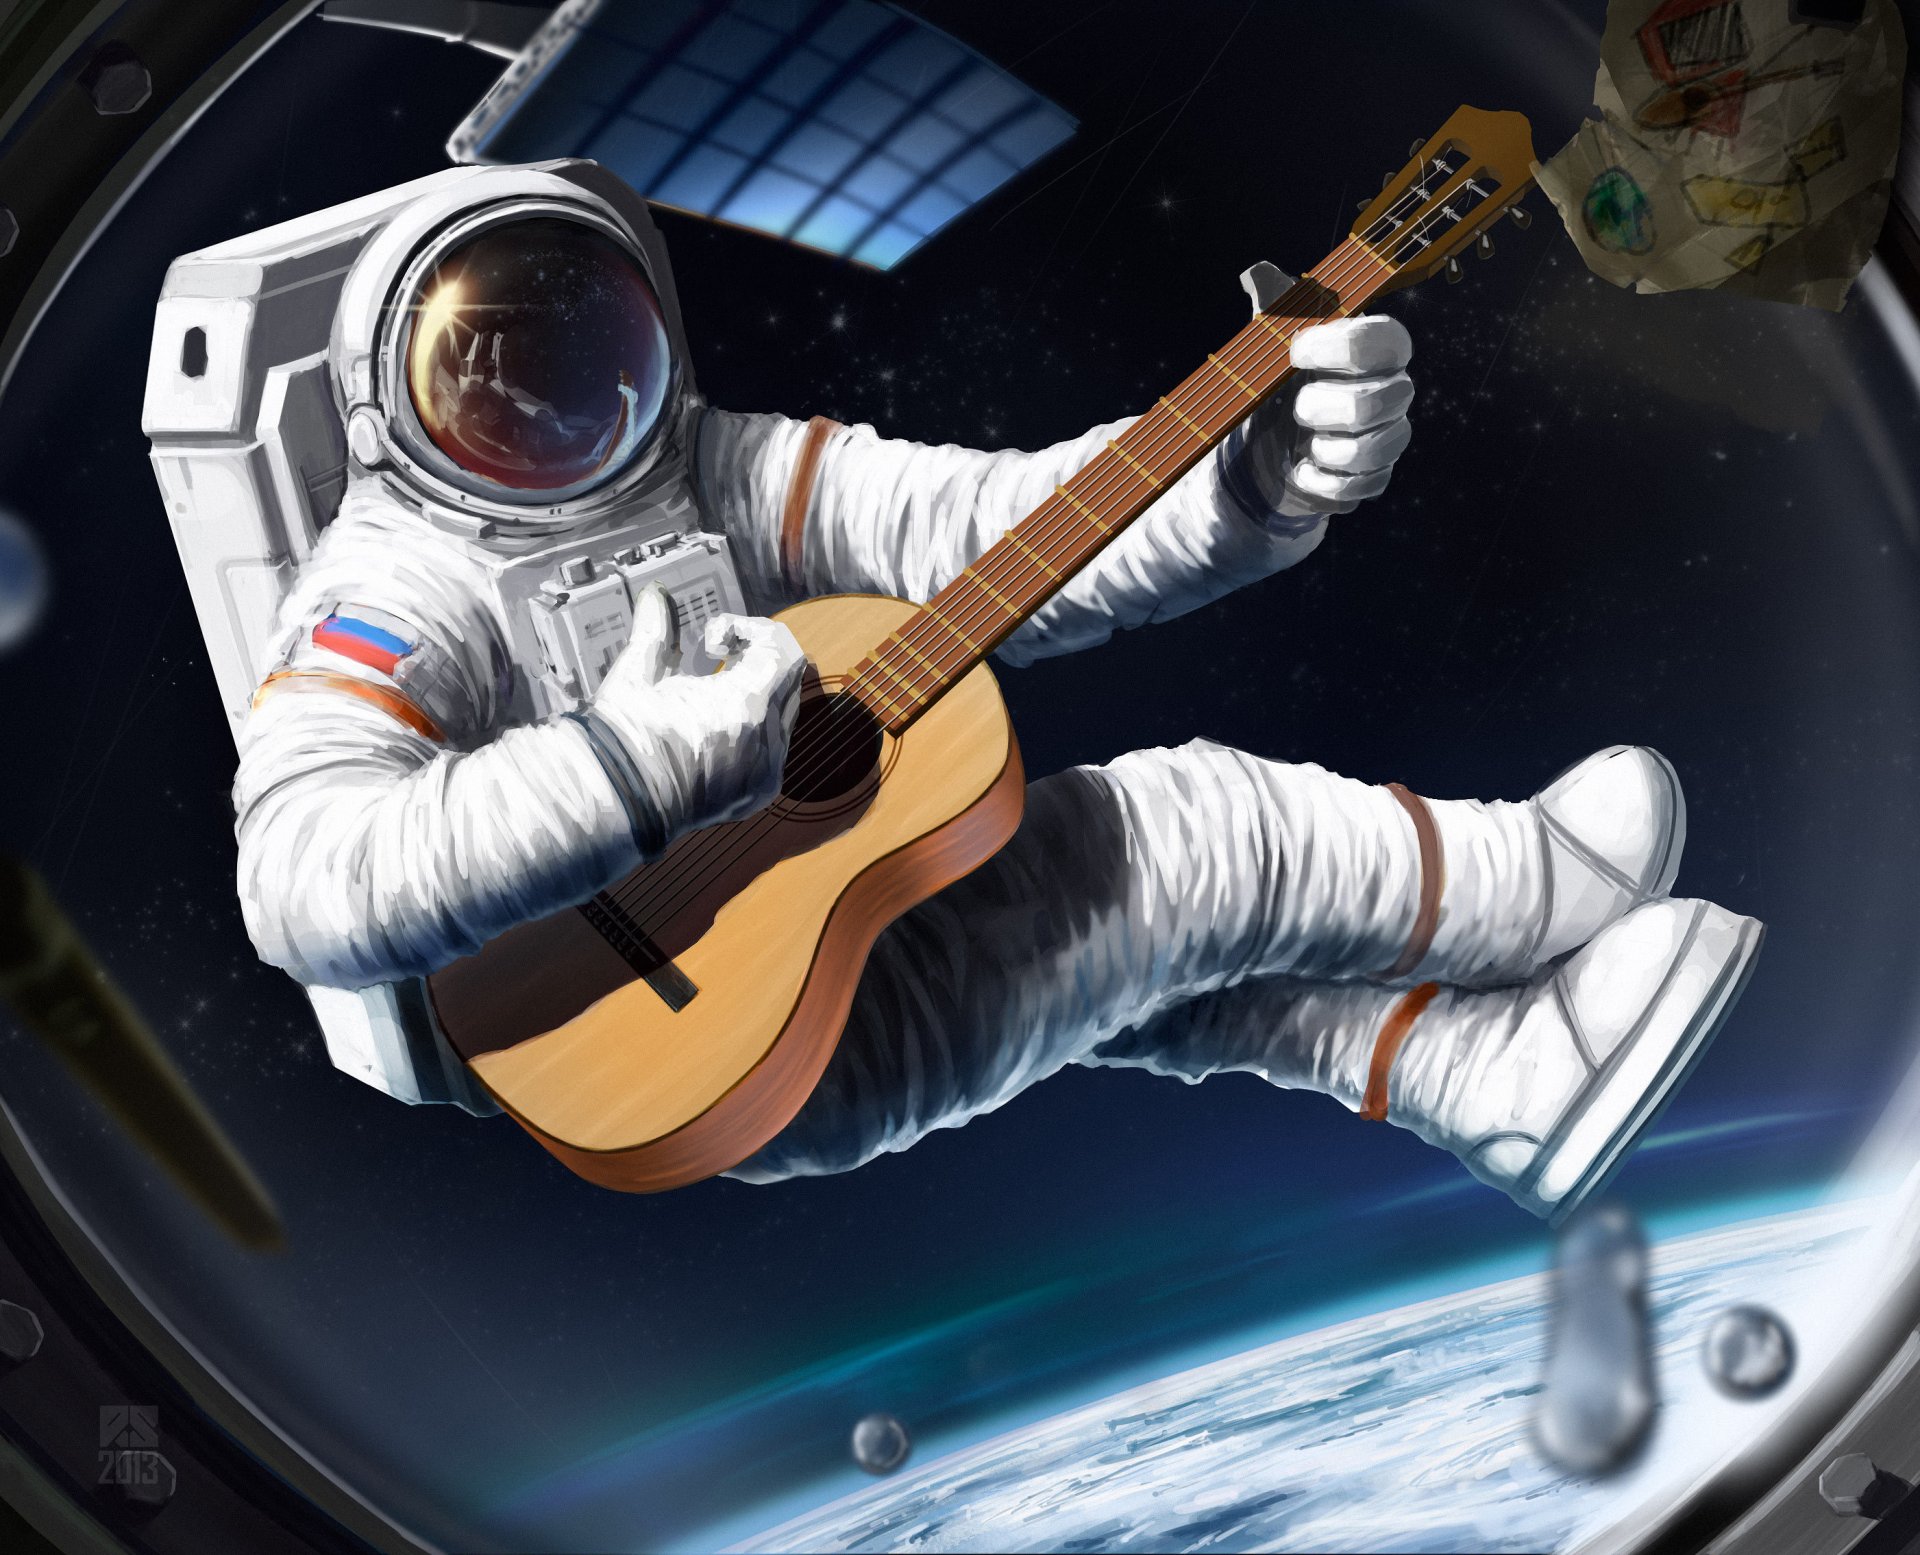 https://w-dog.ru/wallpapers/14/11/304820853198491/art-kosmos-kosmonavt-korabl-gitara-illyuminator-skafandr-shlem.jpg